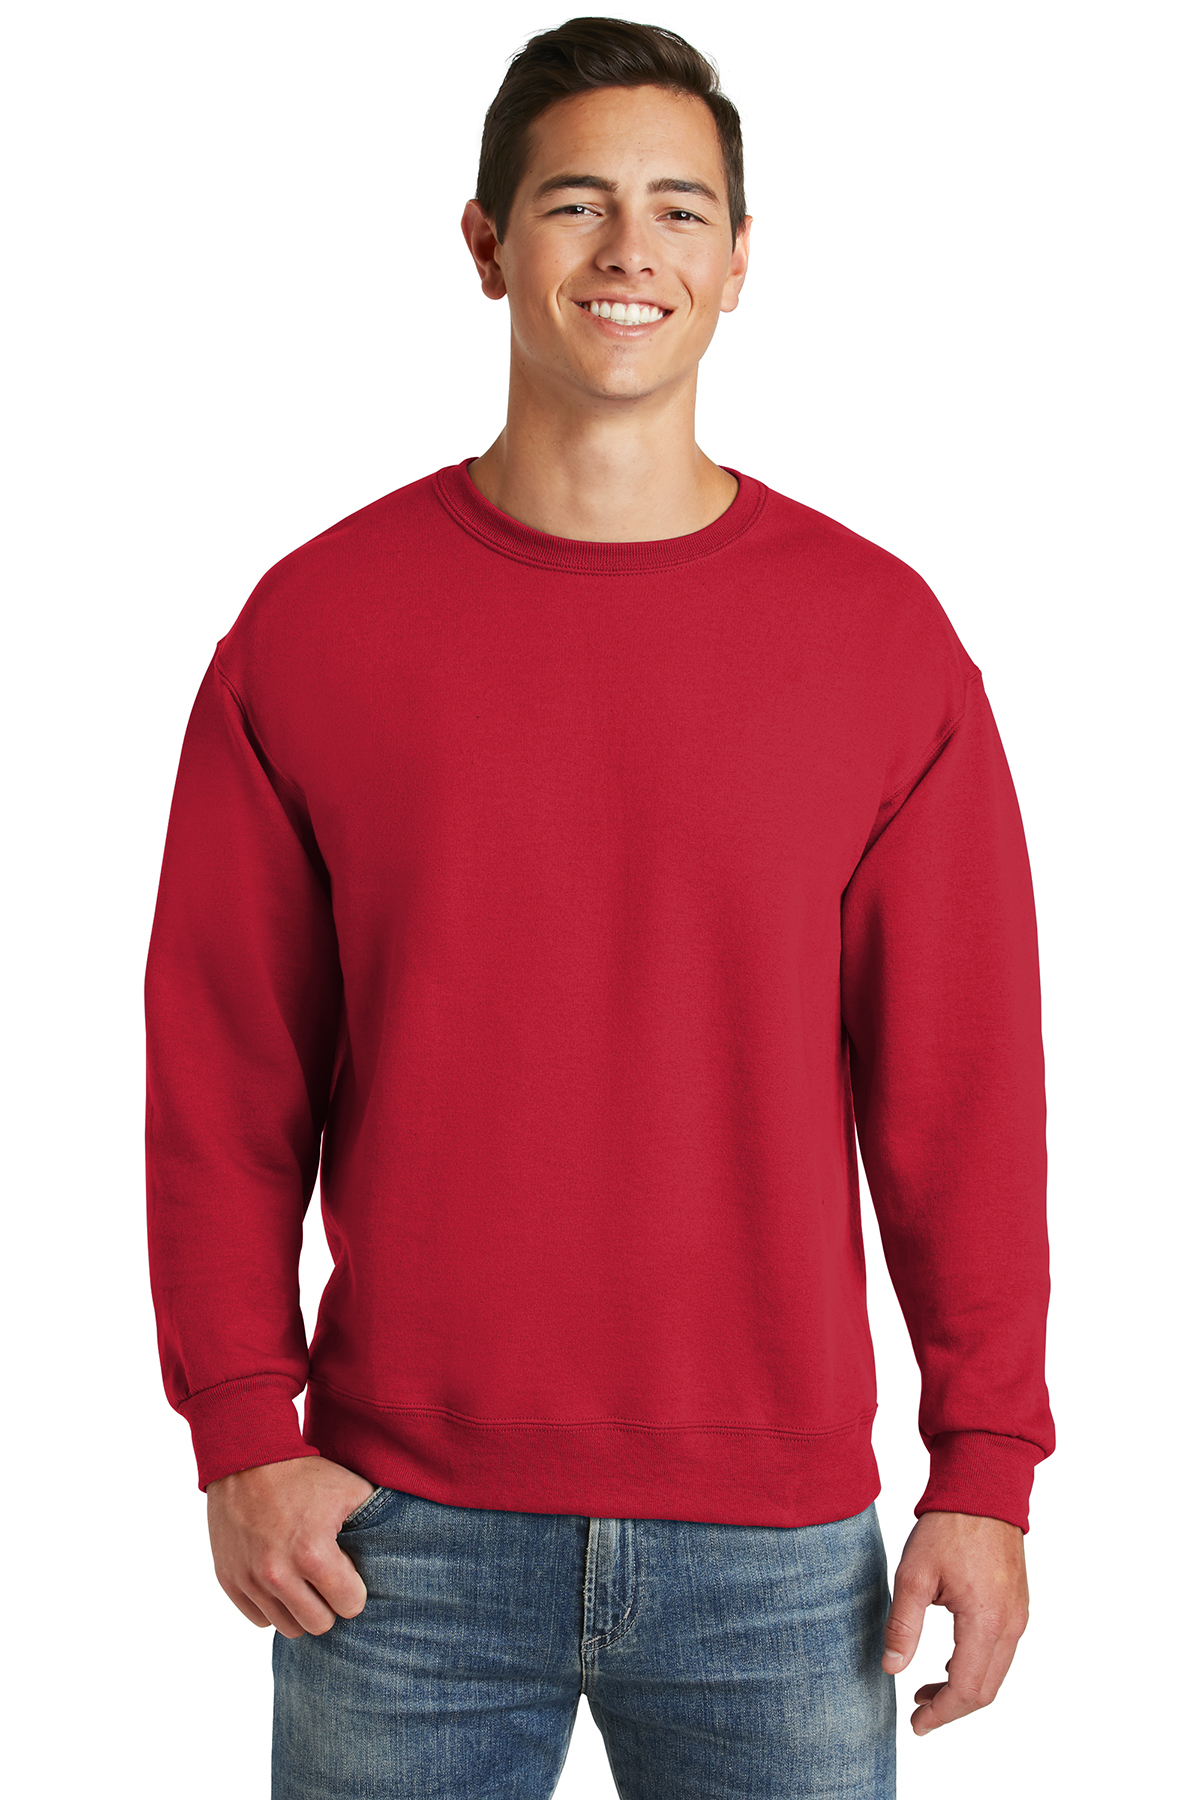 Youth Crew Neck Sweatshirt Jerzees SuperSweats 9.5 oz